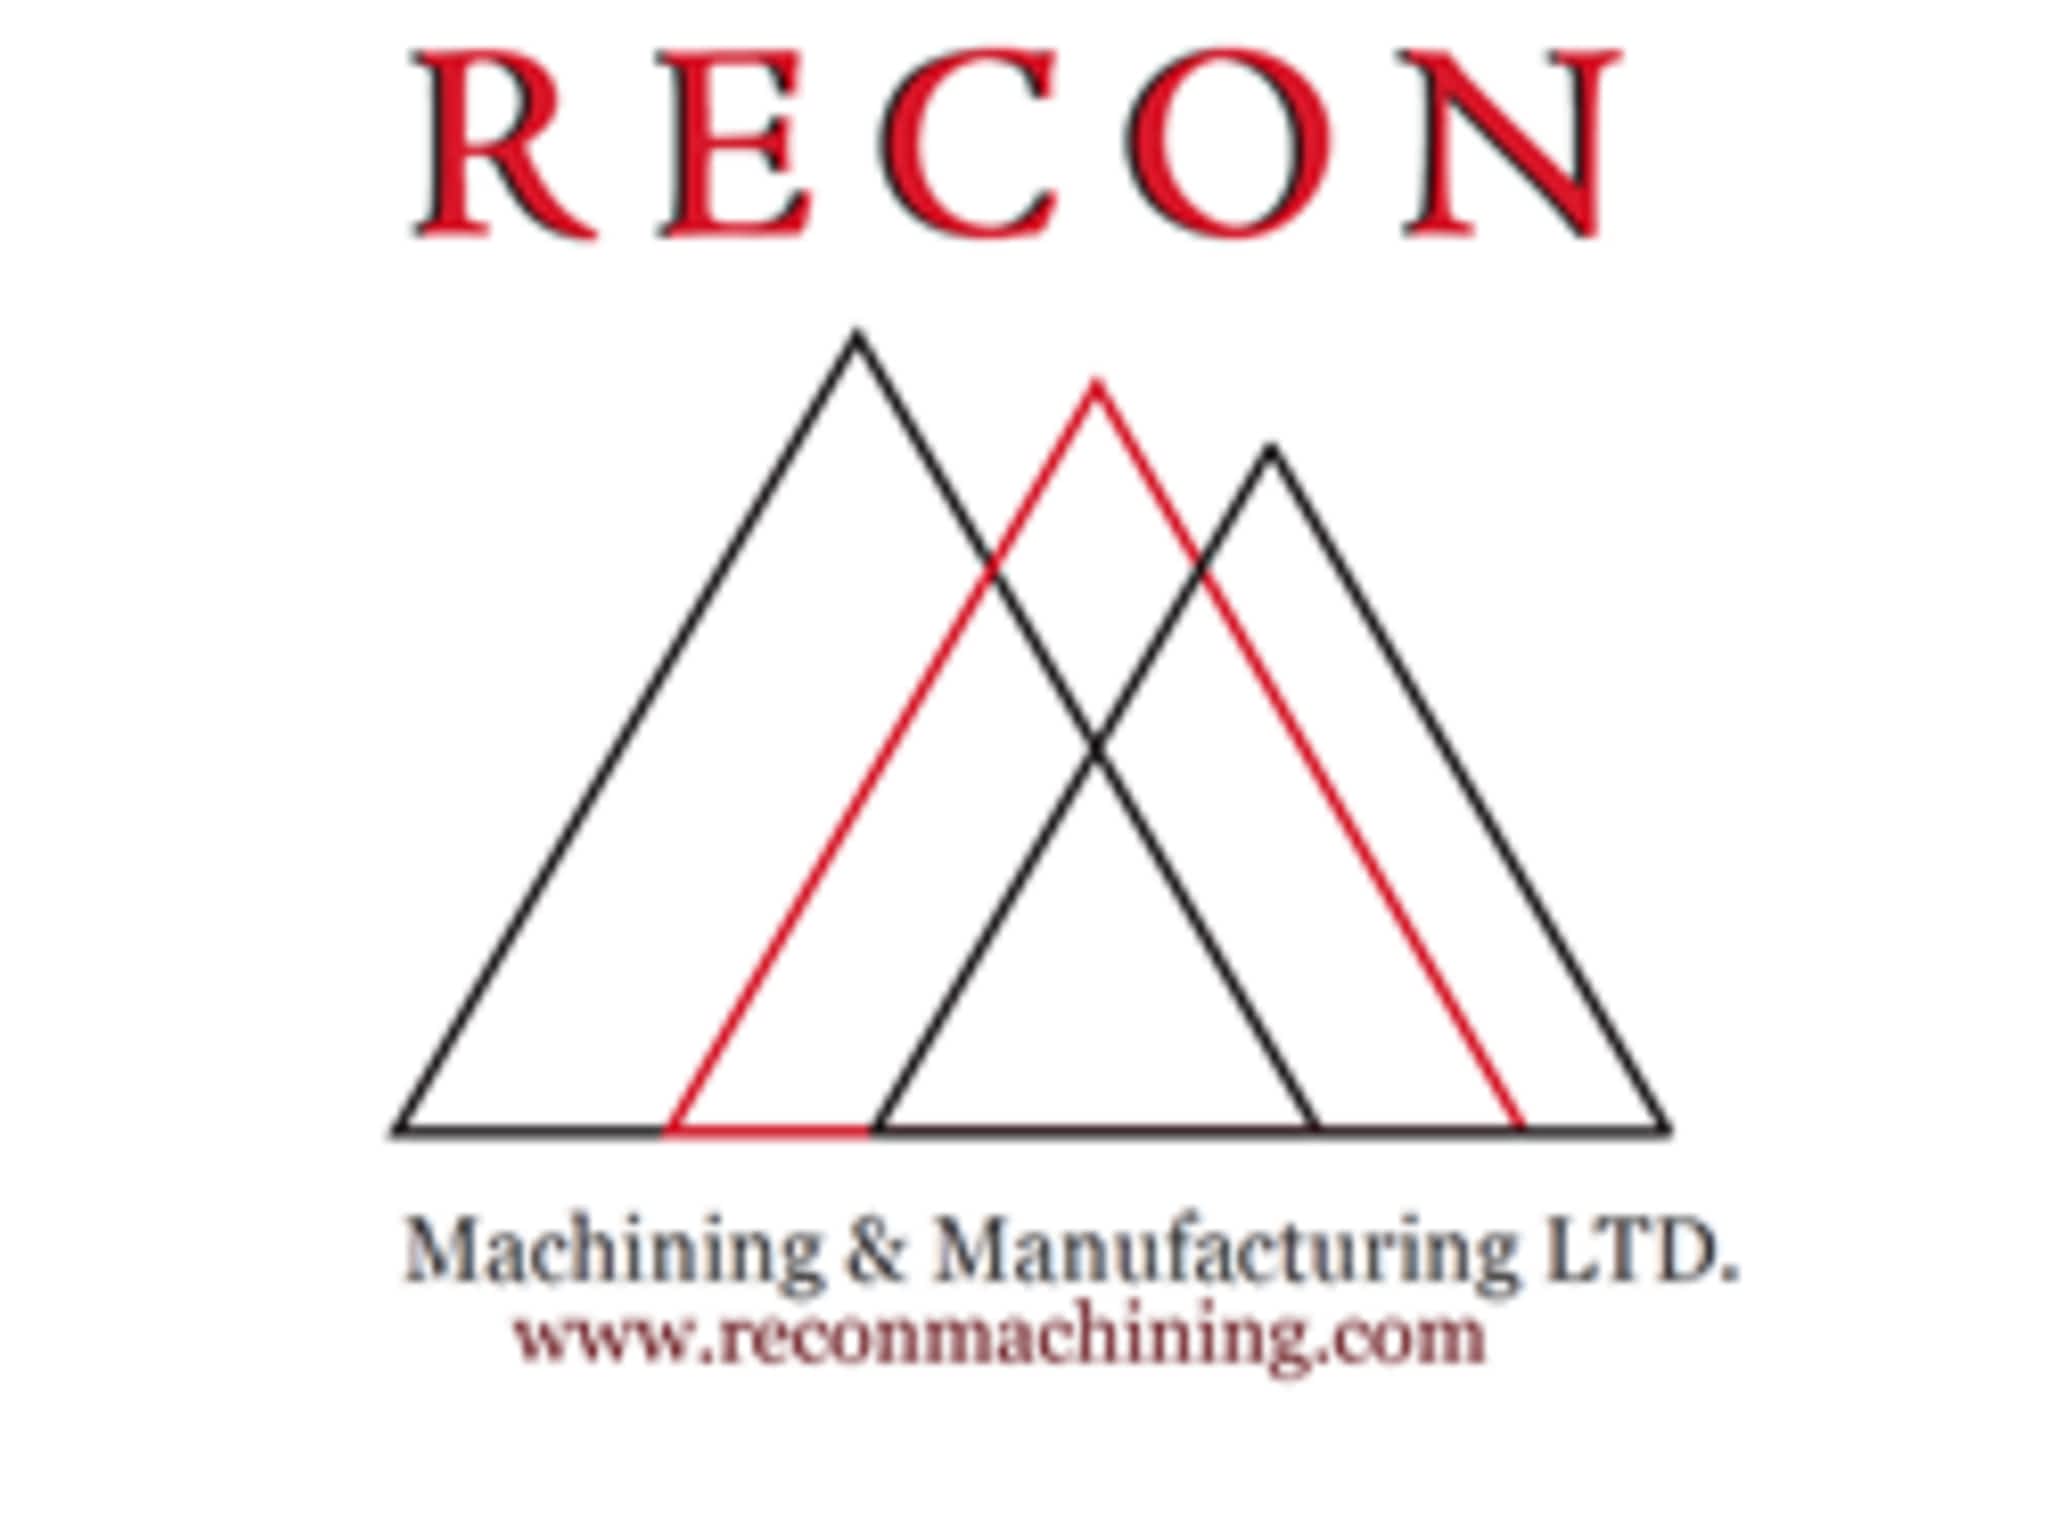 photo Recon Machining & Manufacturing Ltd